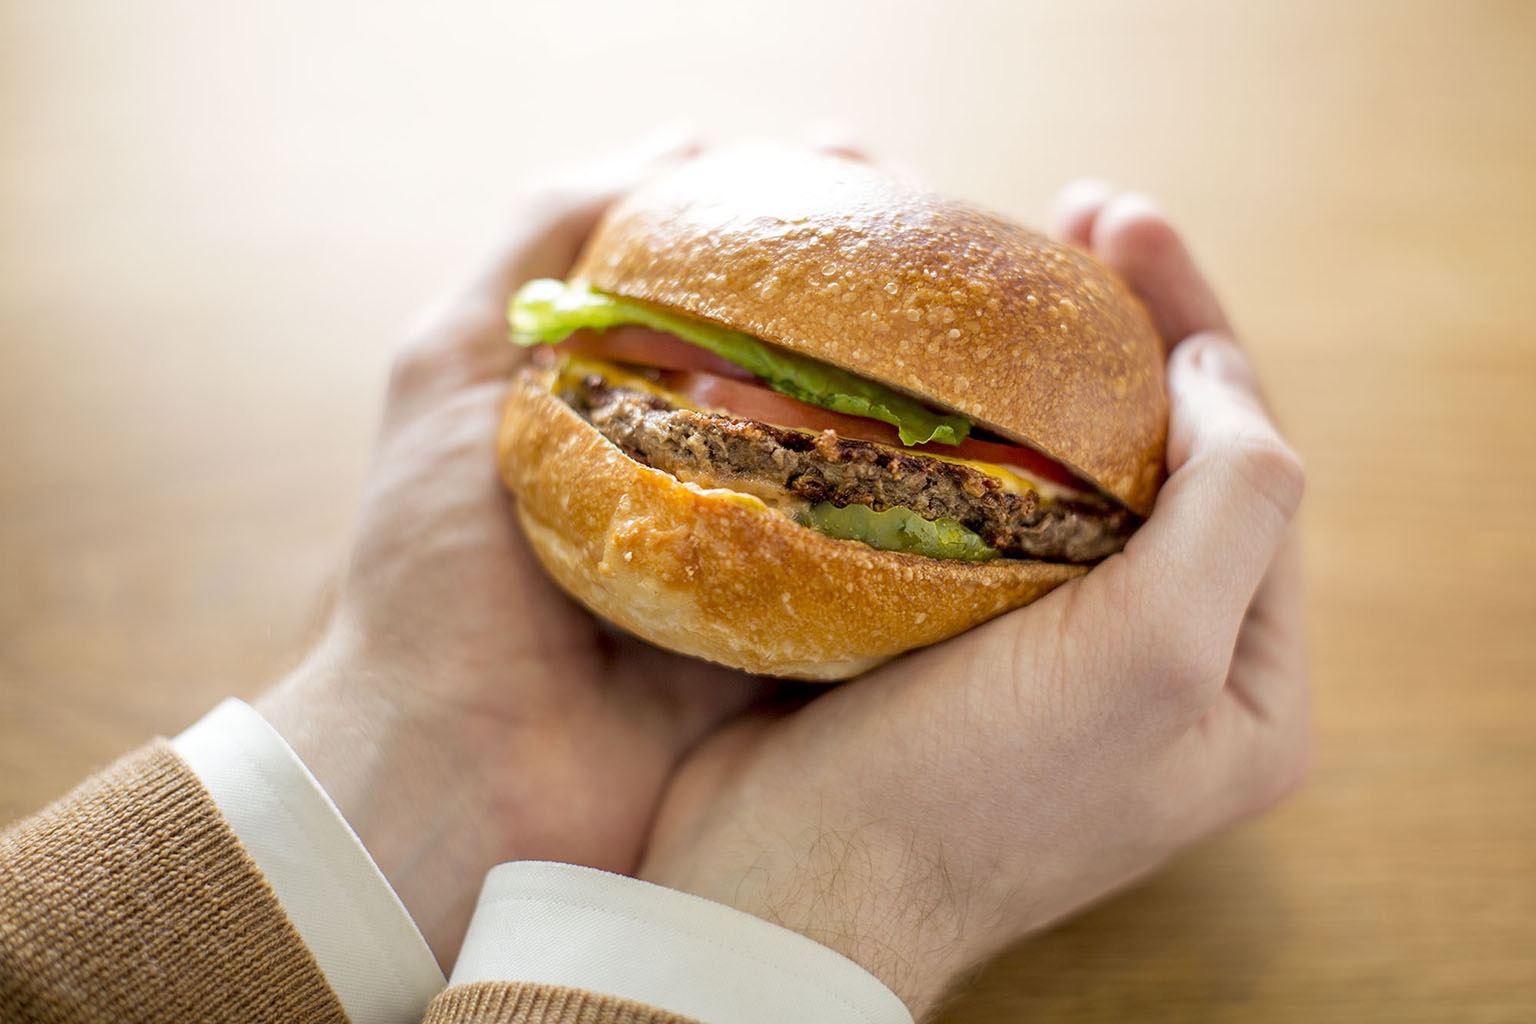 Hands lovingly holding a burger